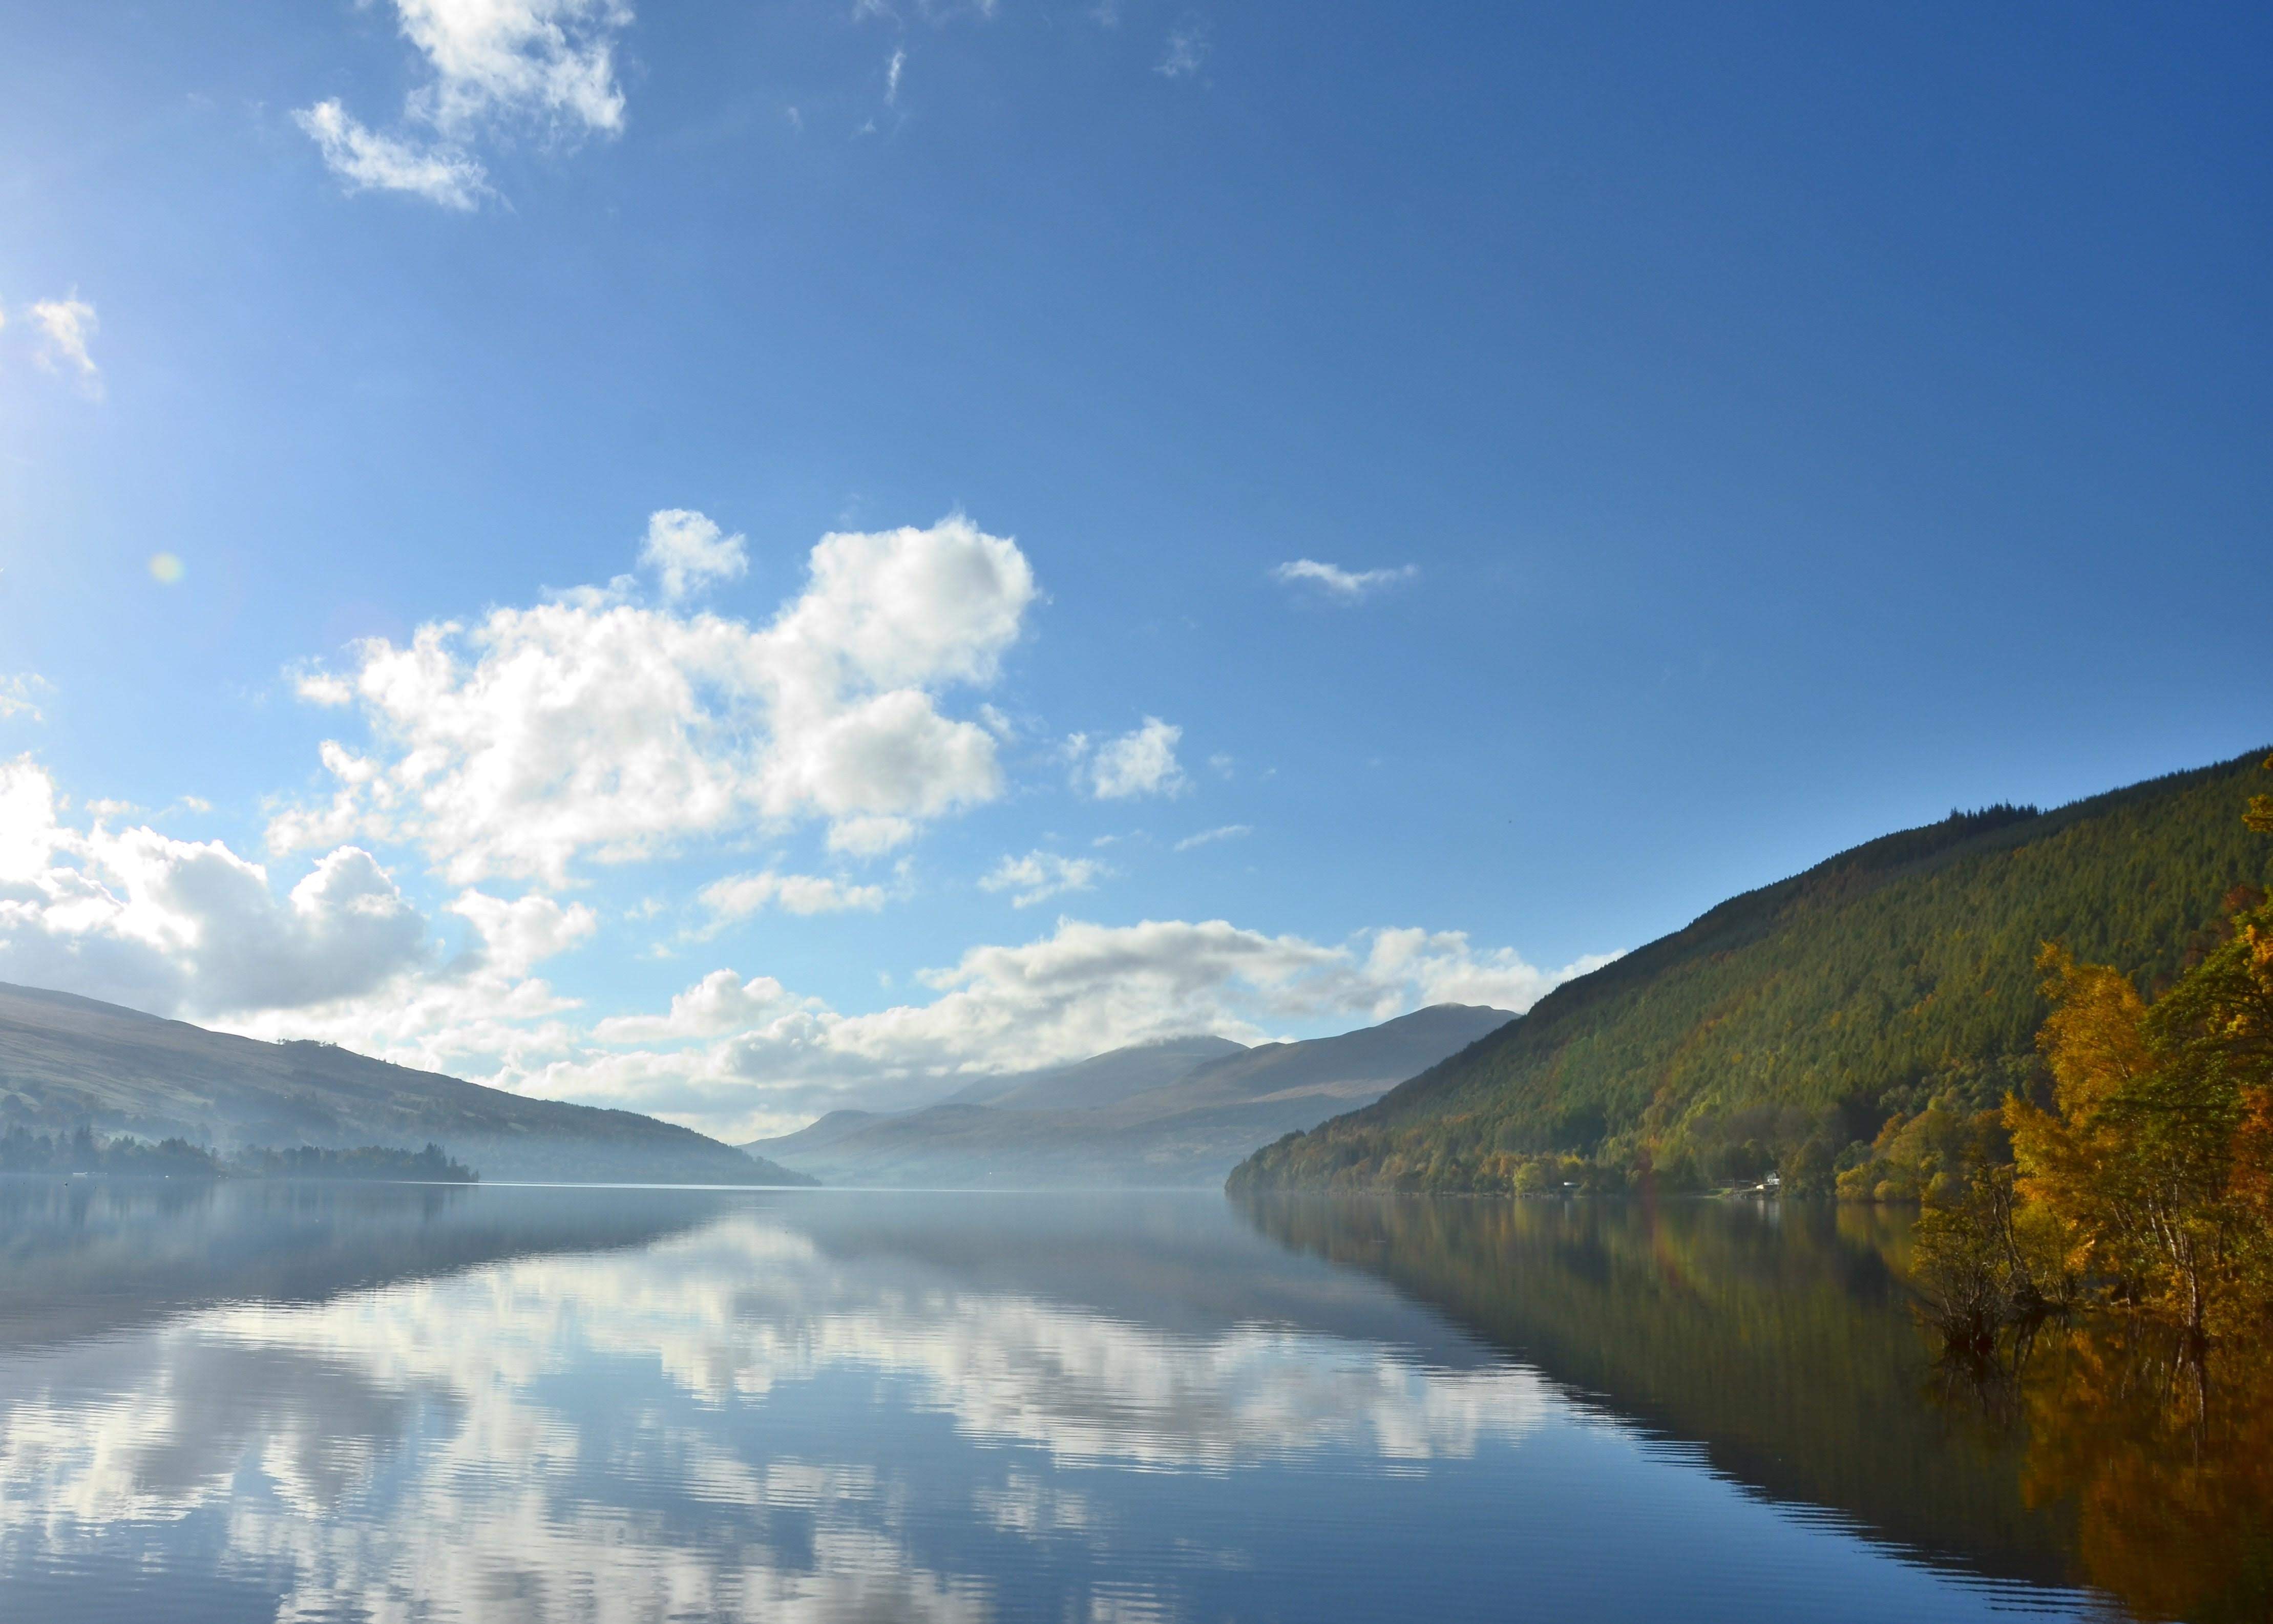 Sky reflected in Scottish Loch